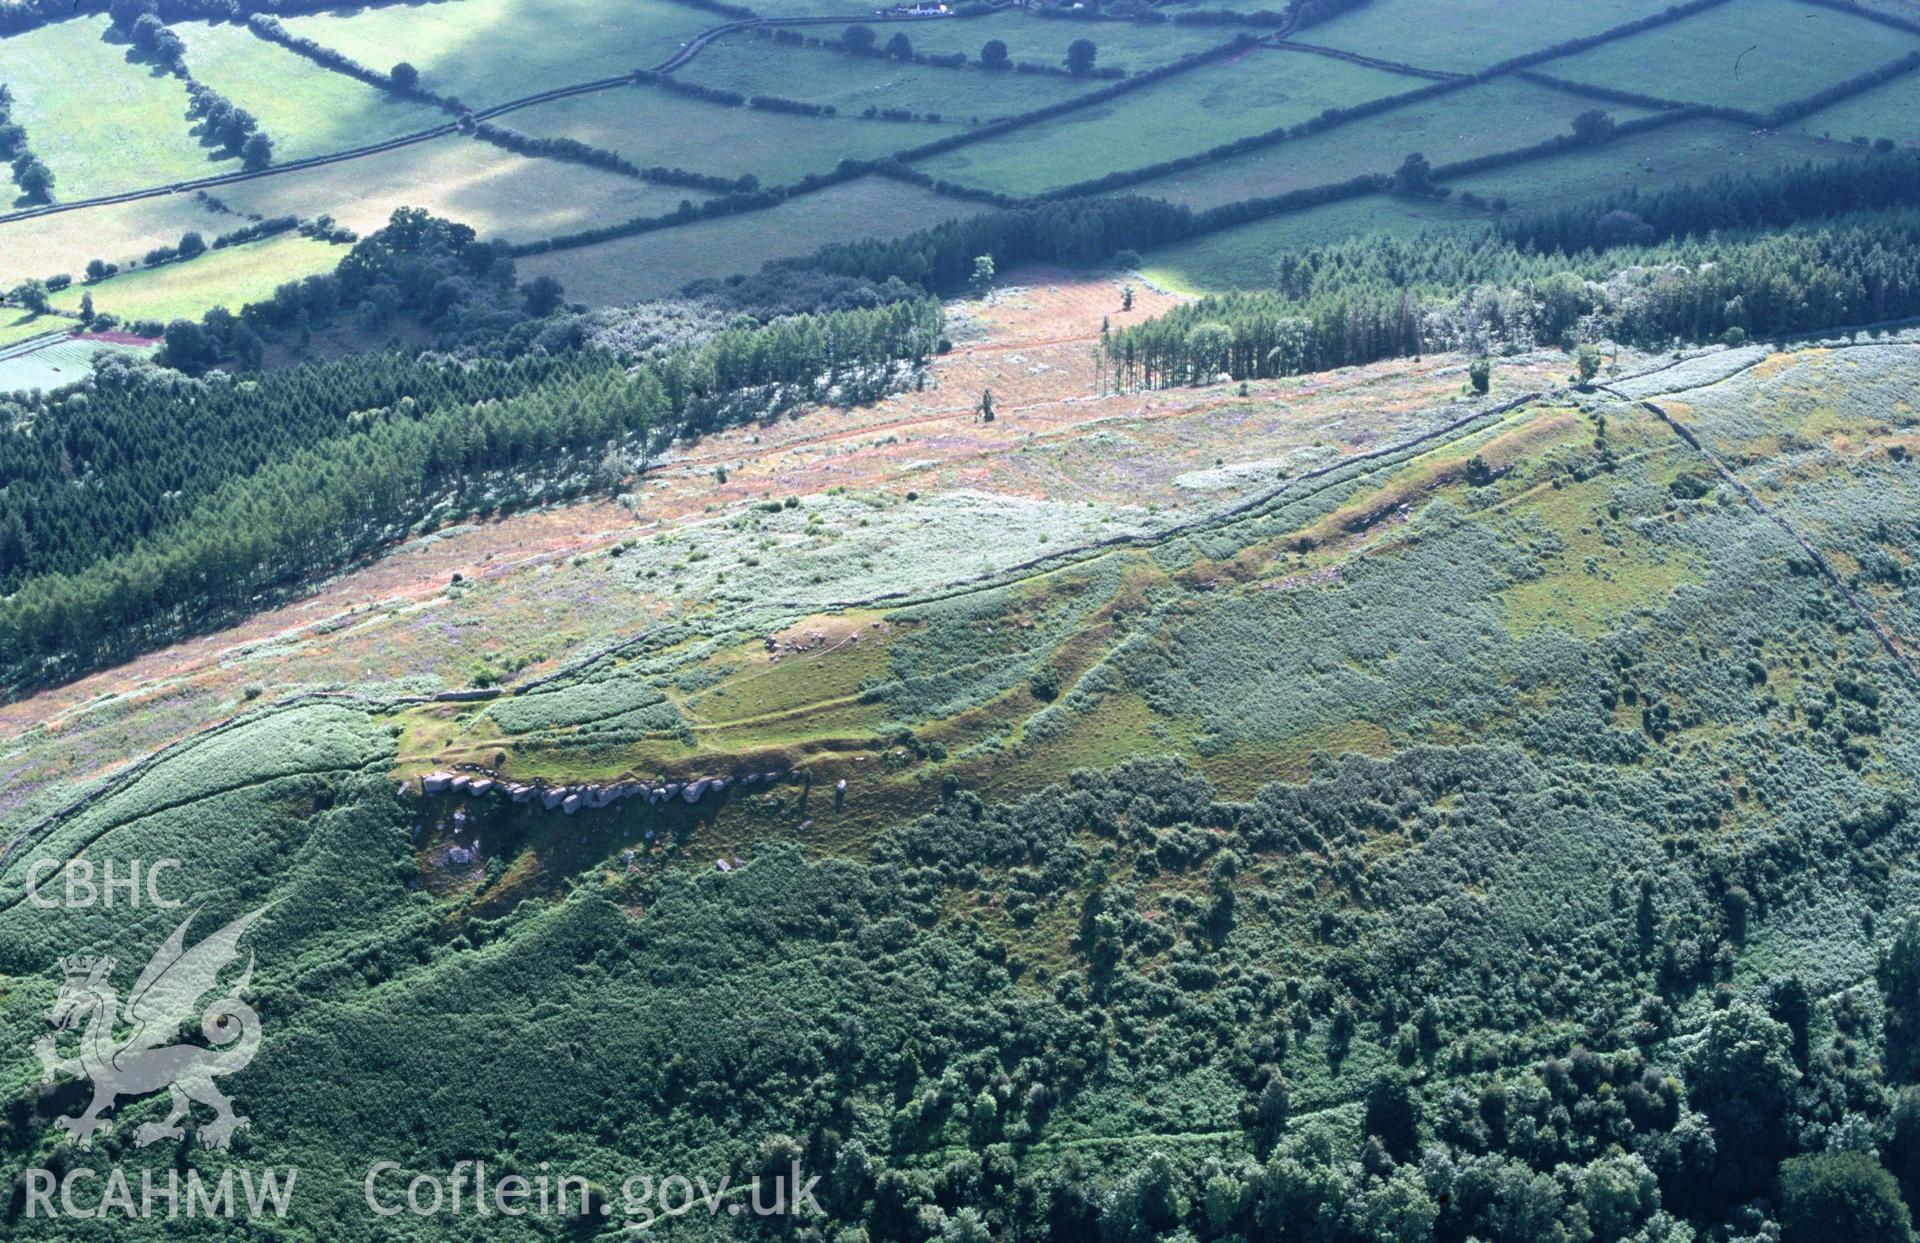 Slide of RCAHMW colour oblique aerial photograph of Allt Yr Esgair Camp, taken by T.G. Driver, 24/7/1998.